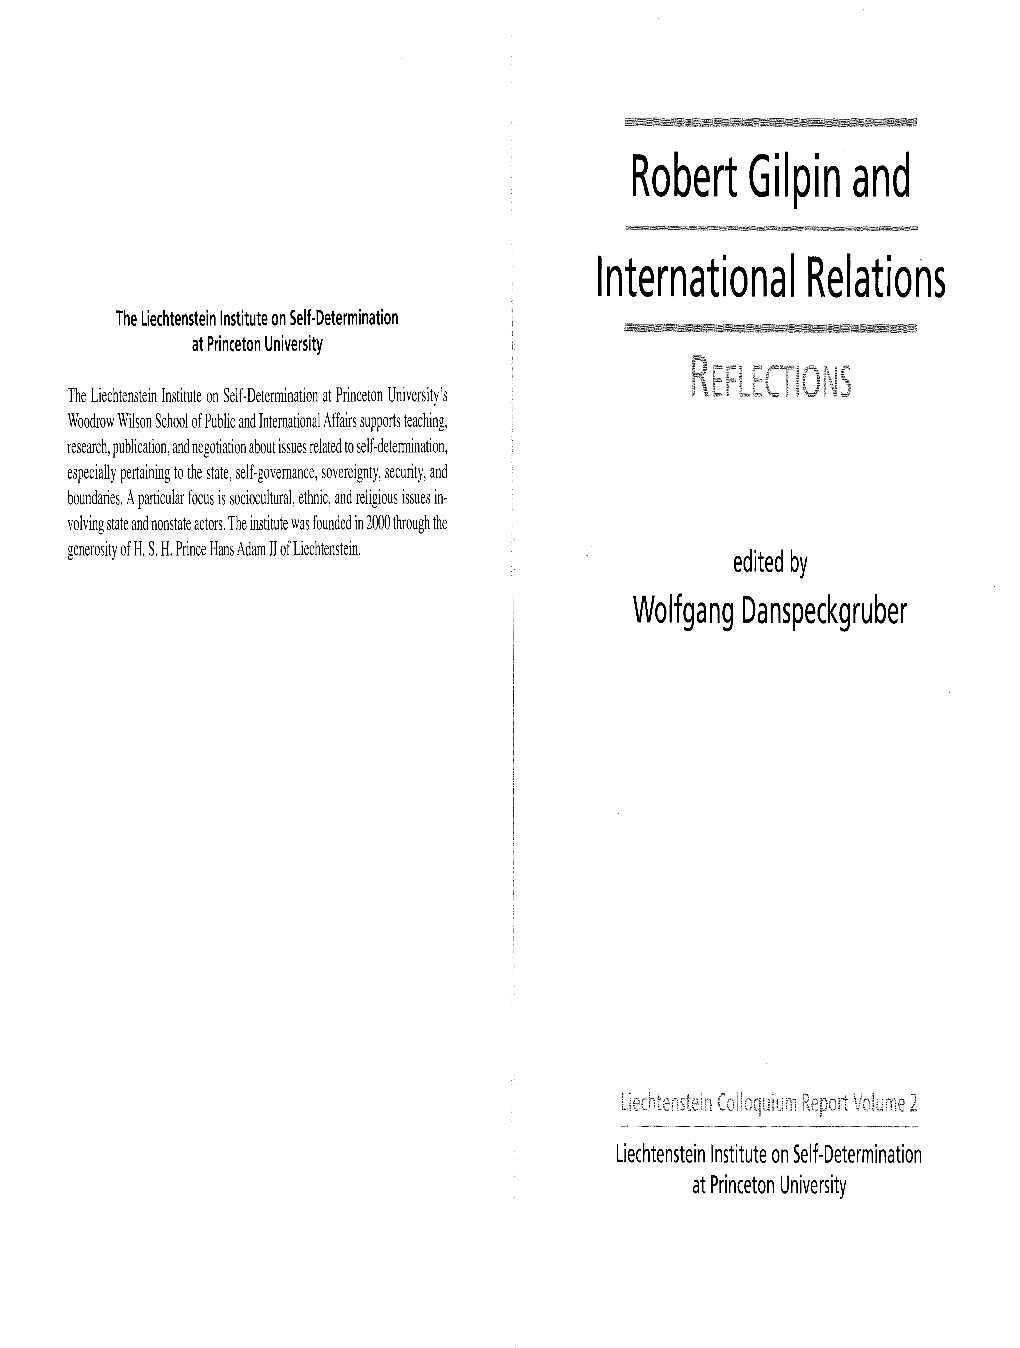 Robert Gilpin and International Relations the Liechtenstein Institute on Self-Determination at Princeton University